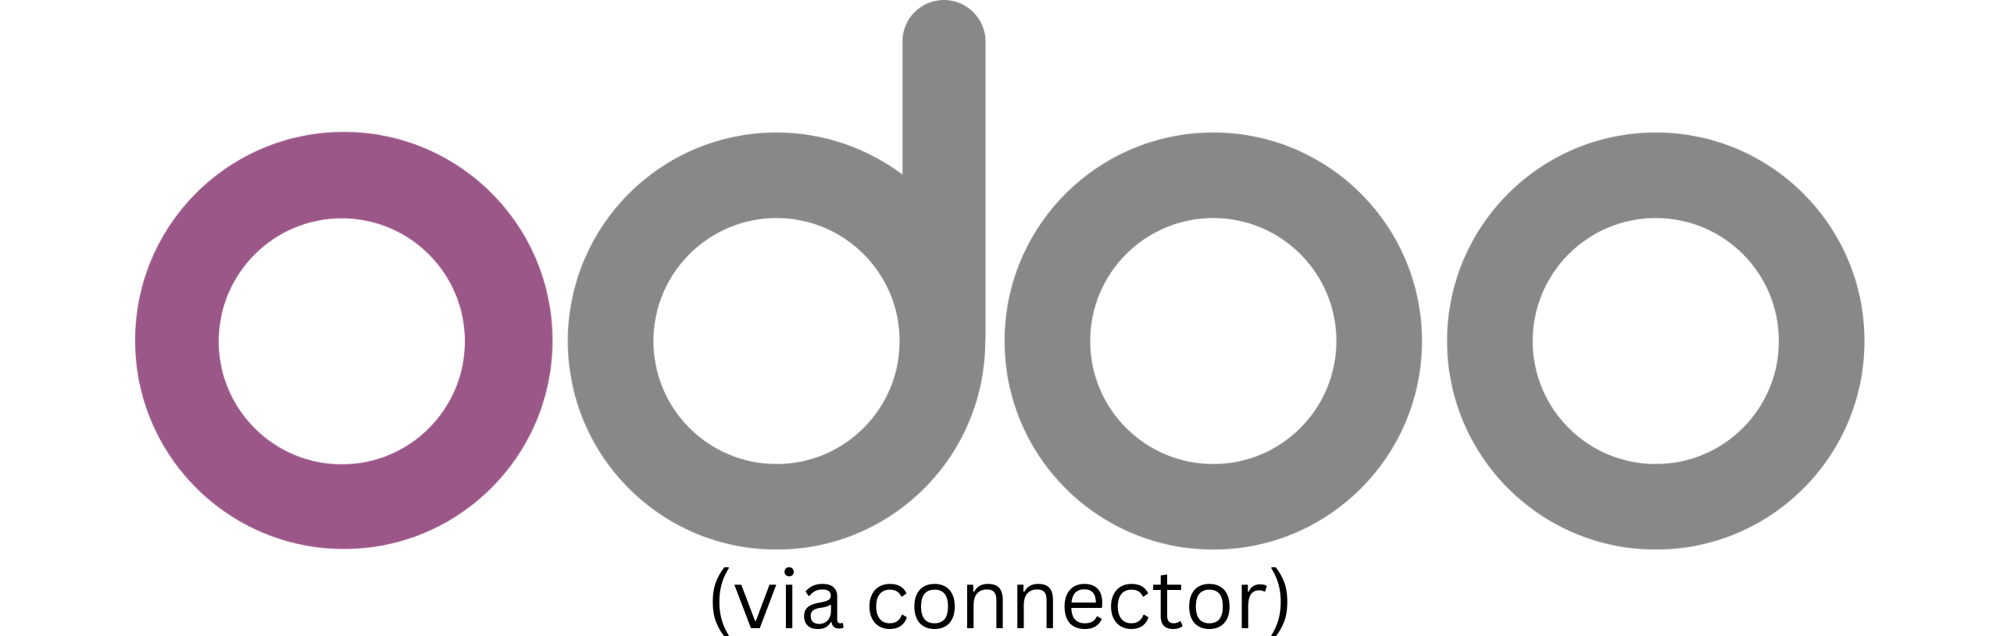 odoo_integration